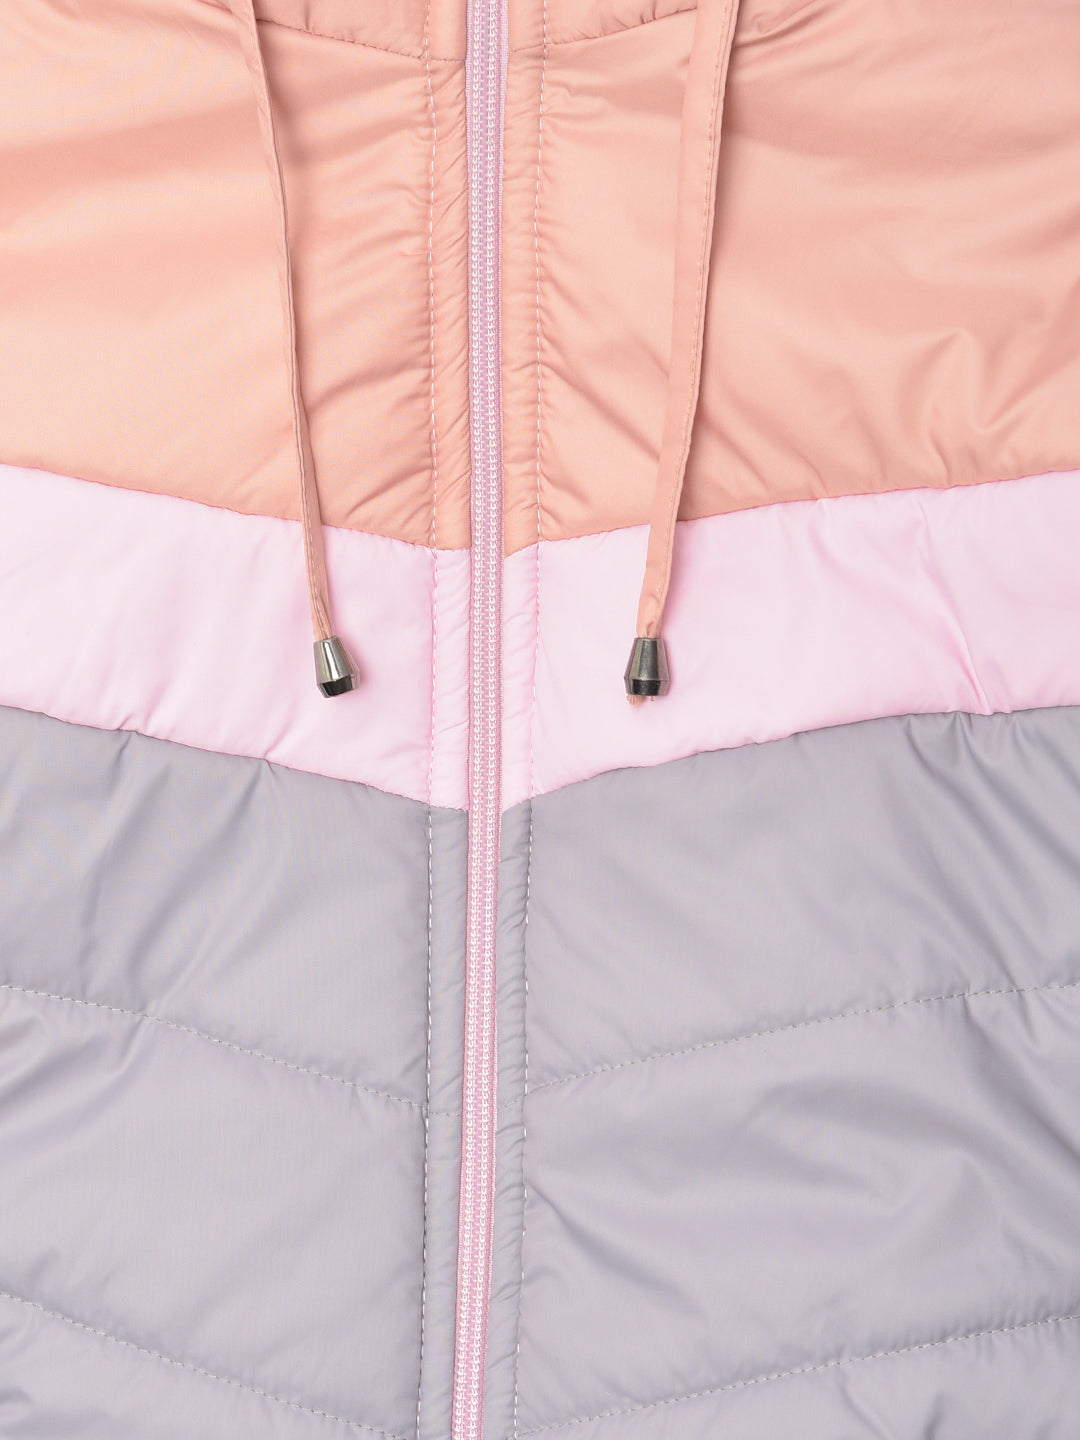 Multi Colourblocked Hooded Jacket - Girls Jackets